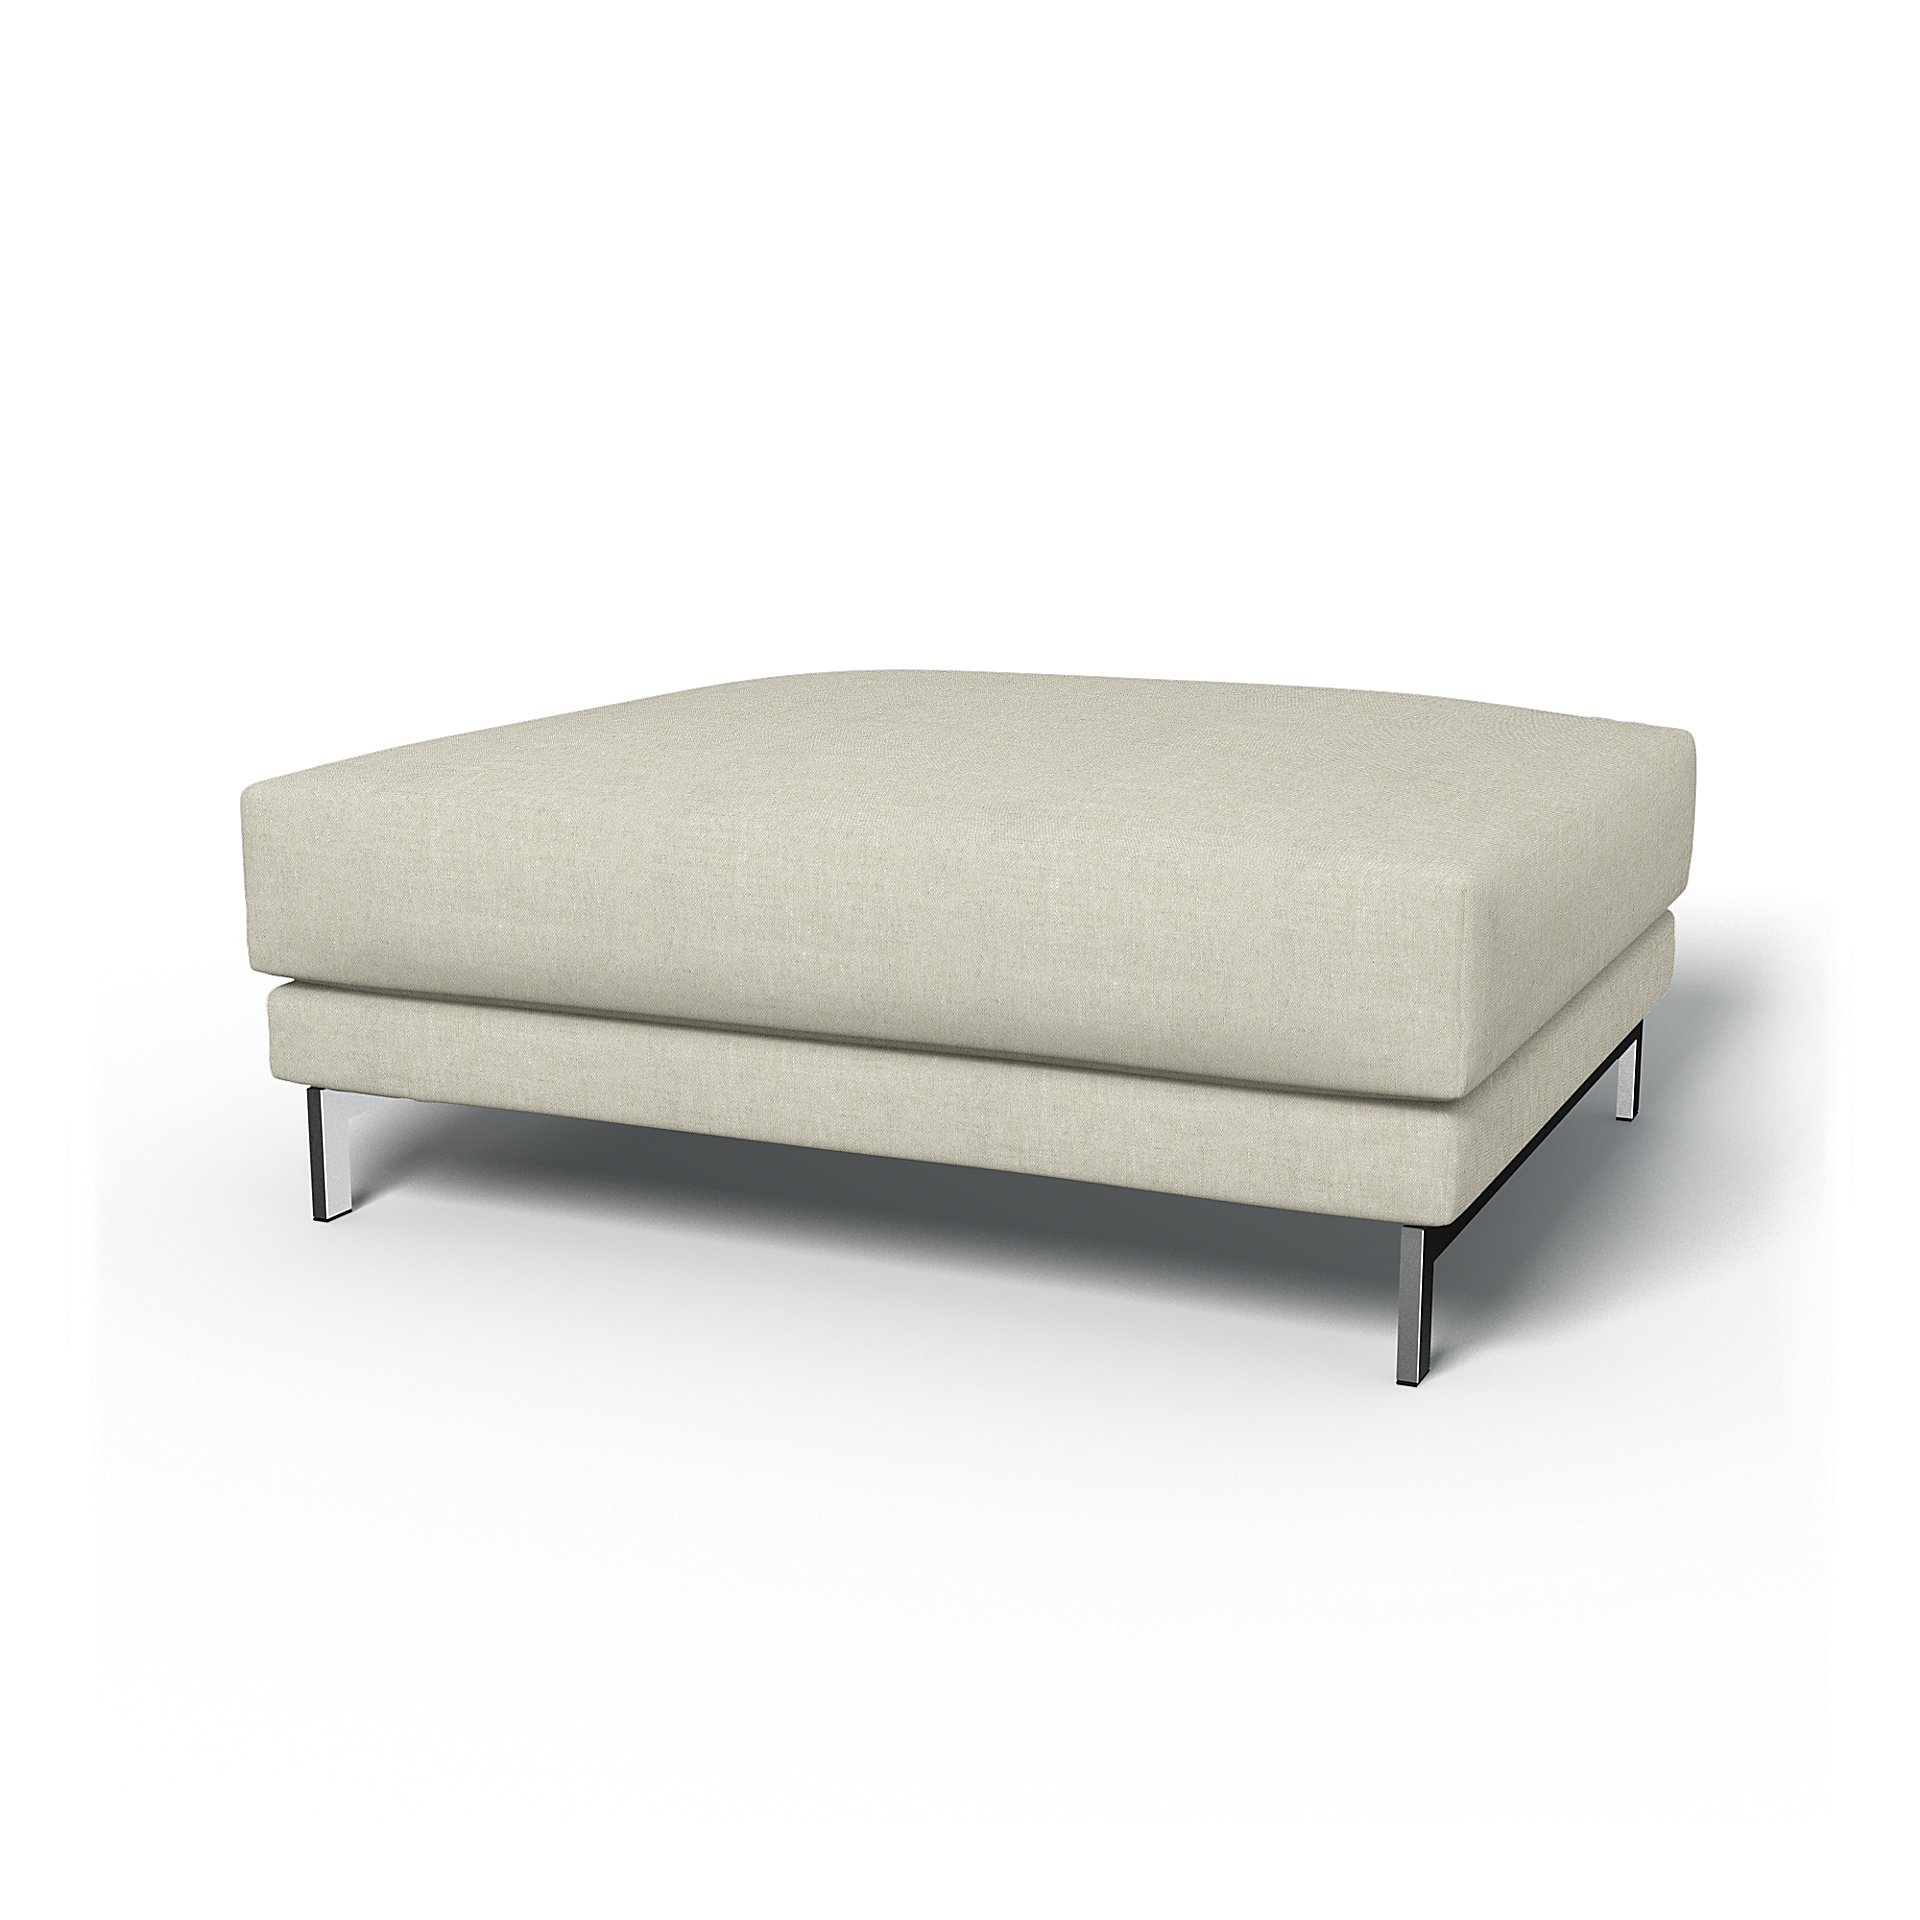 IKEA - Nockeby Footstool Cover, Natural, Linen - Bemz